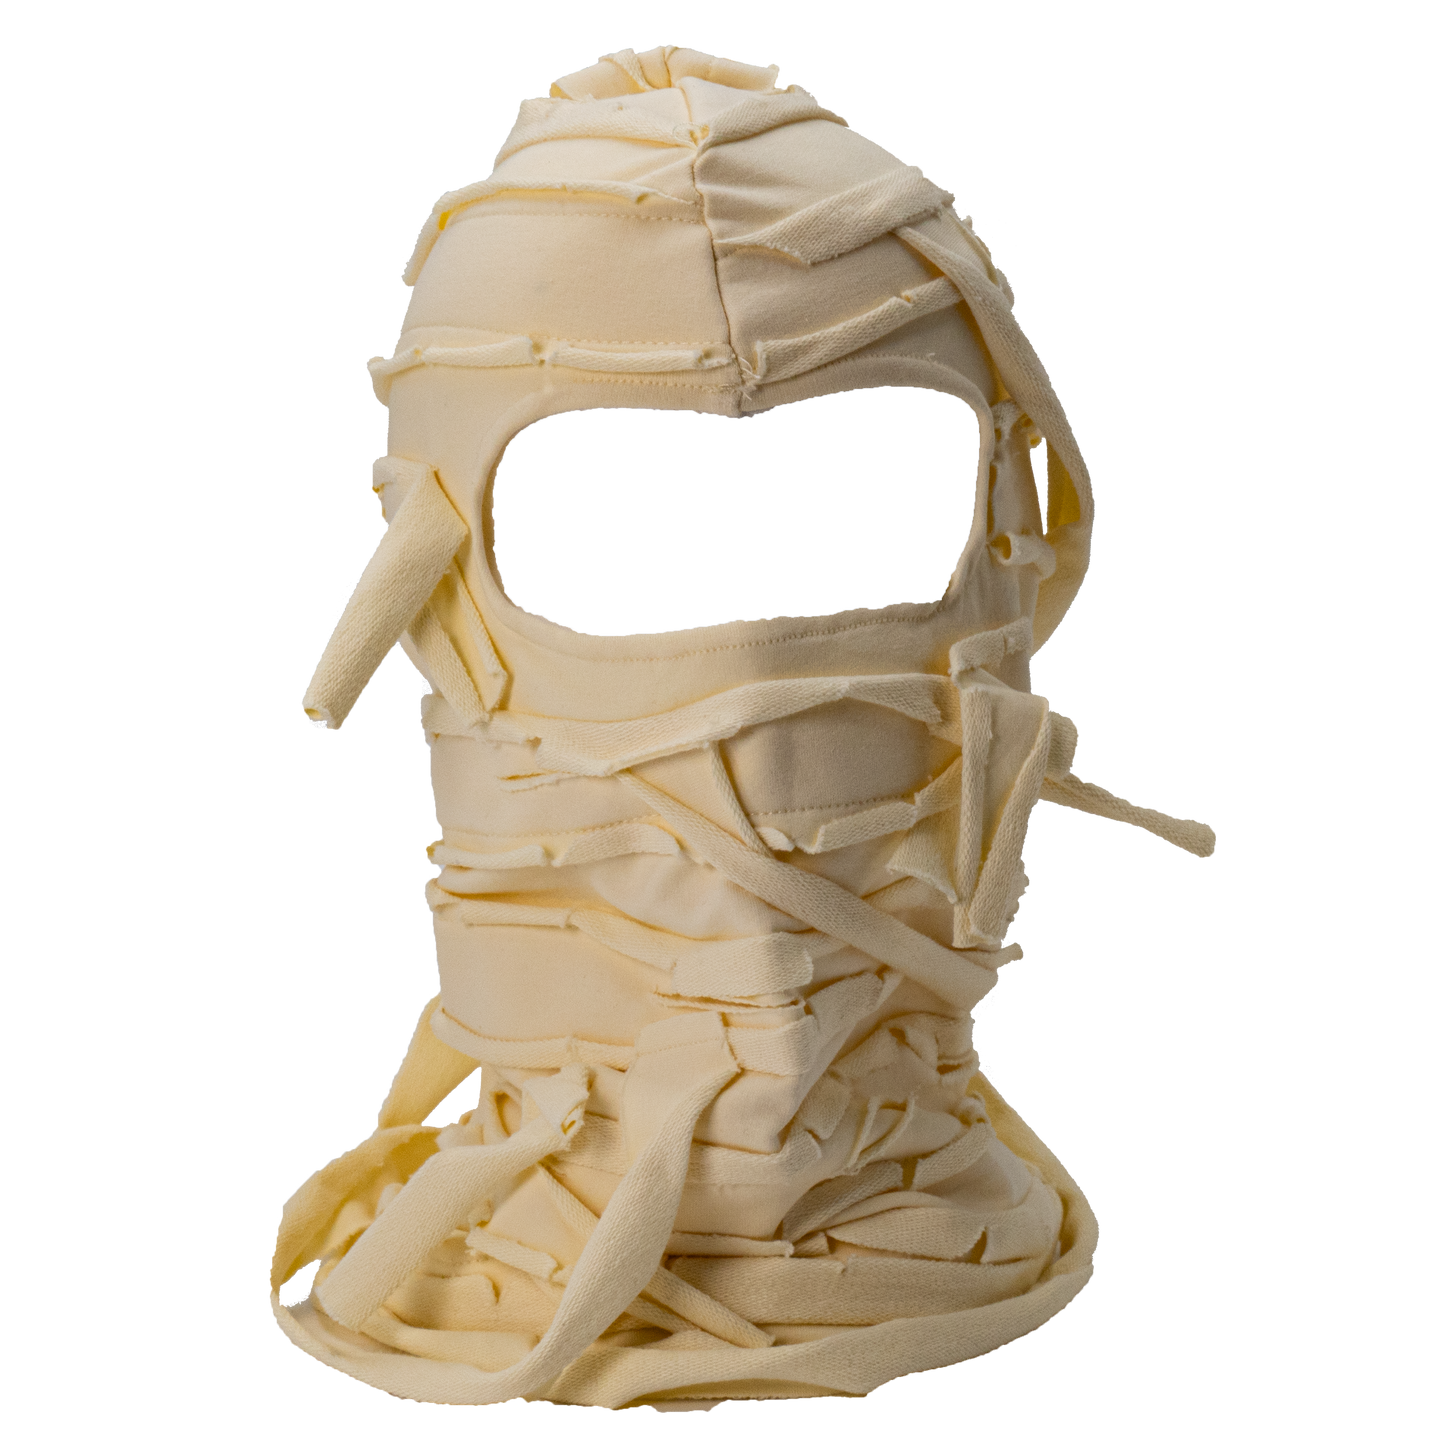 Mummy Ski-Mask